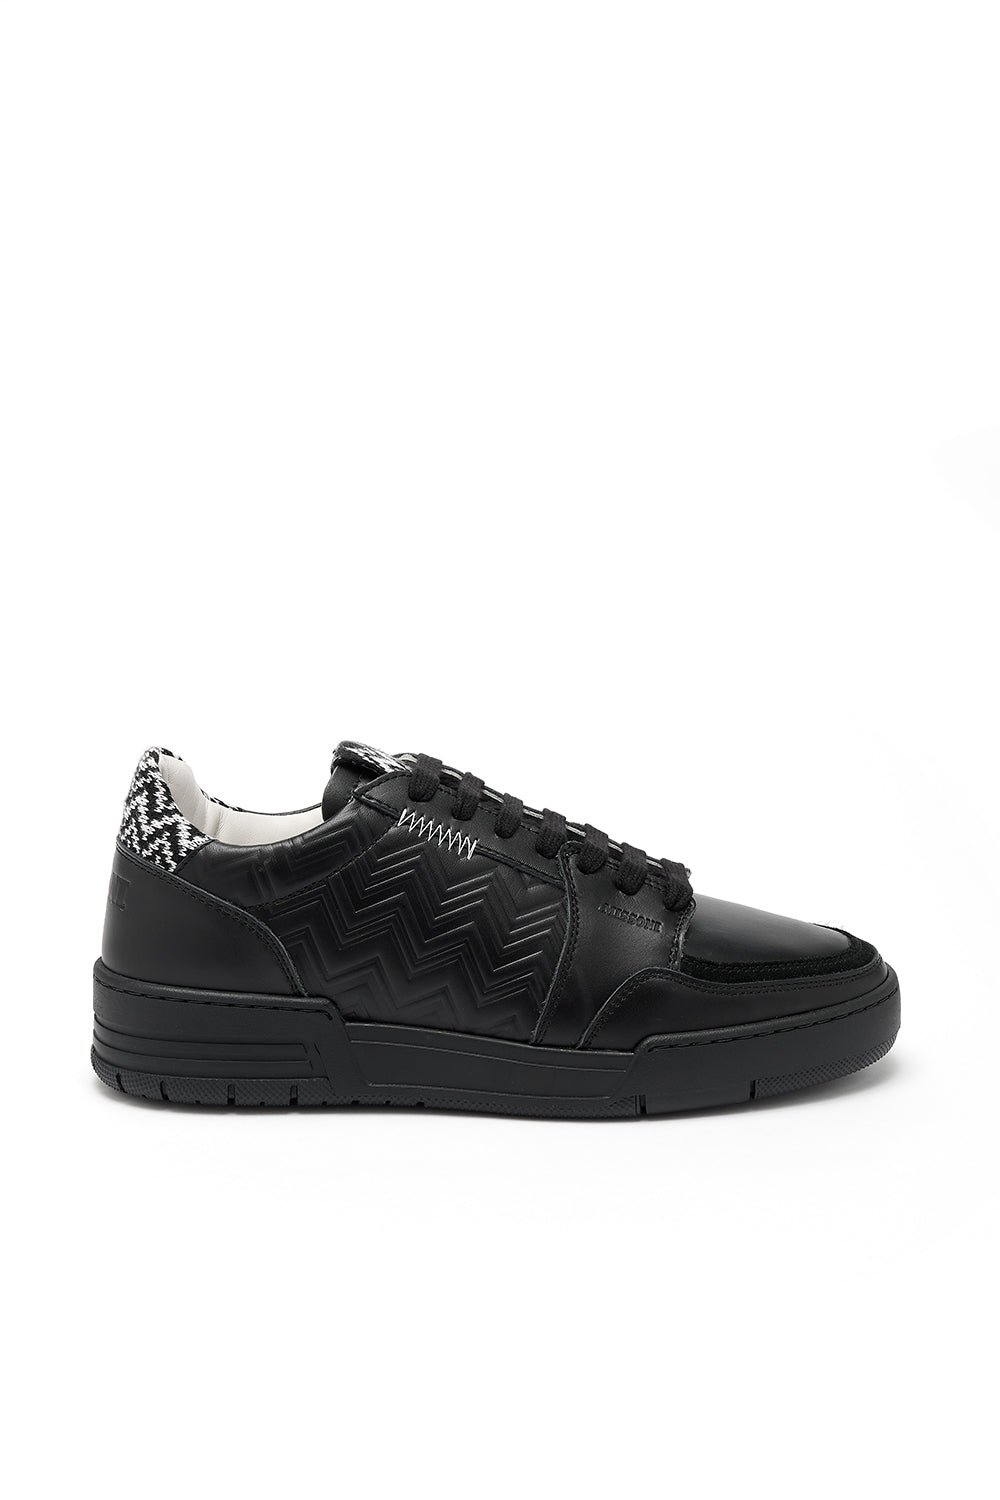 Missoni Men's Zigzag Leather Sneakers Black - Side View